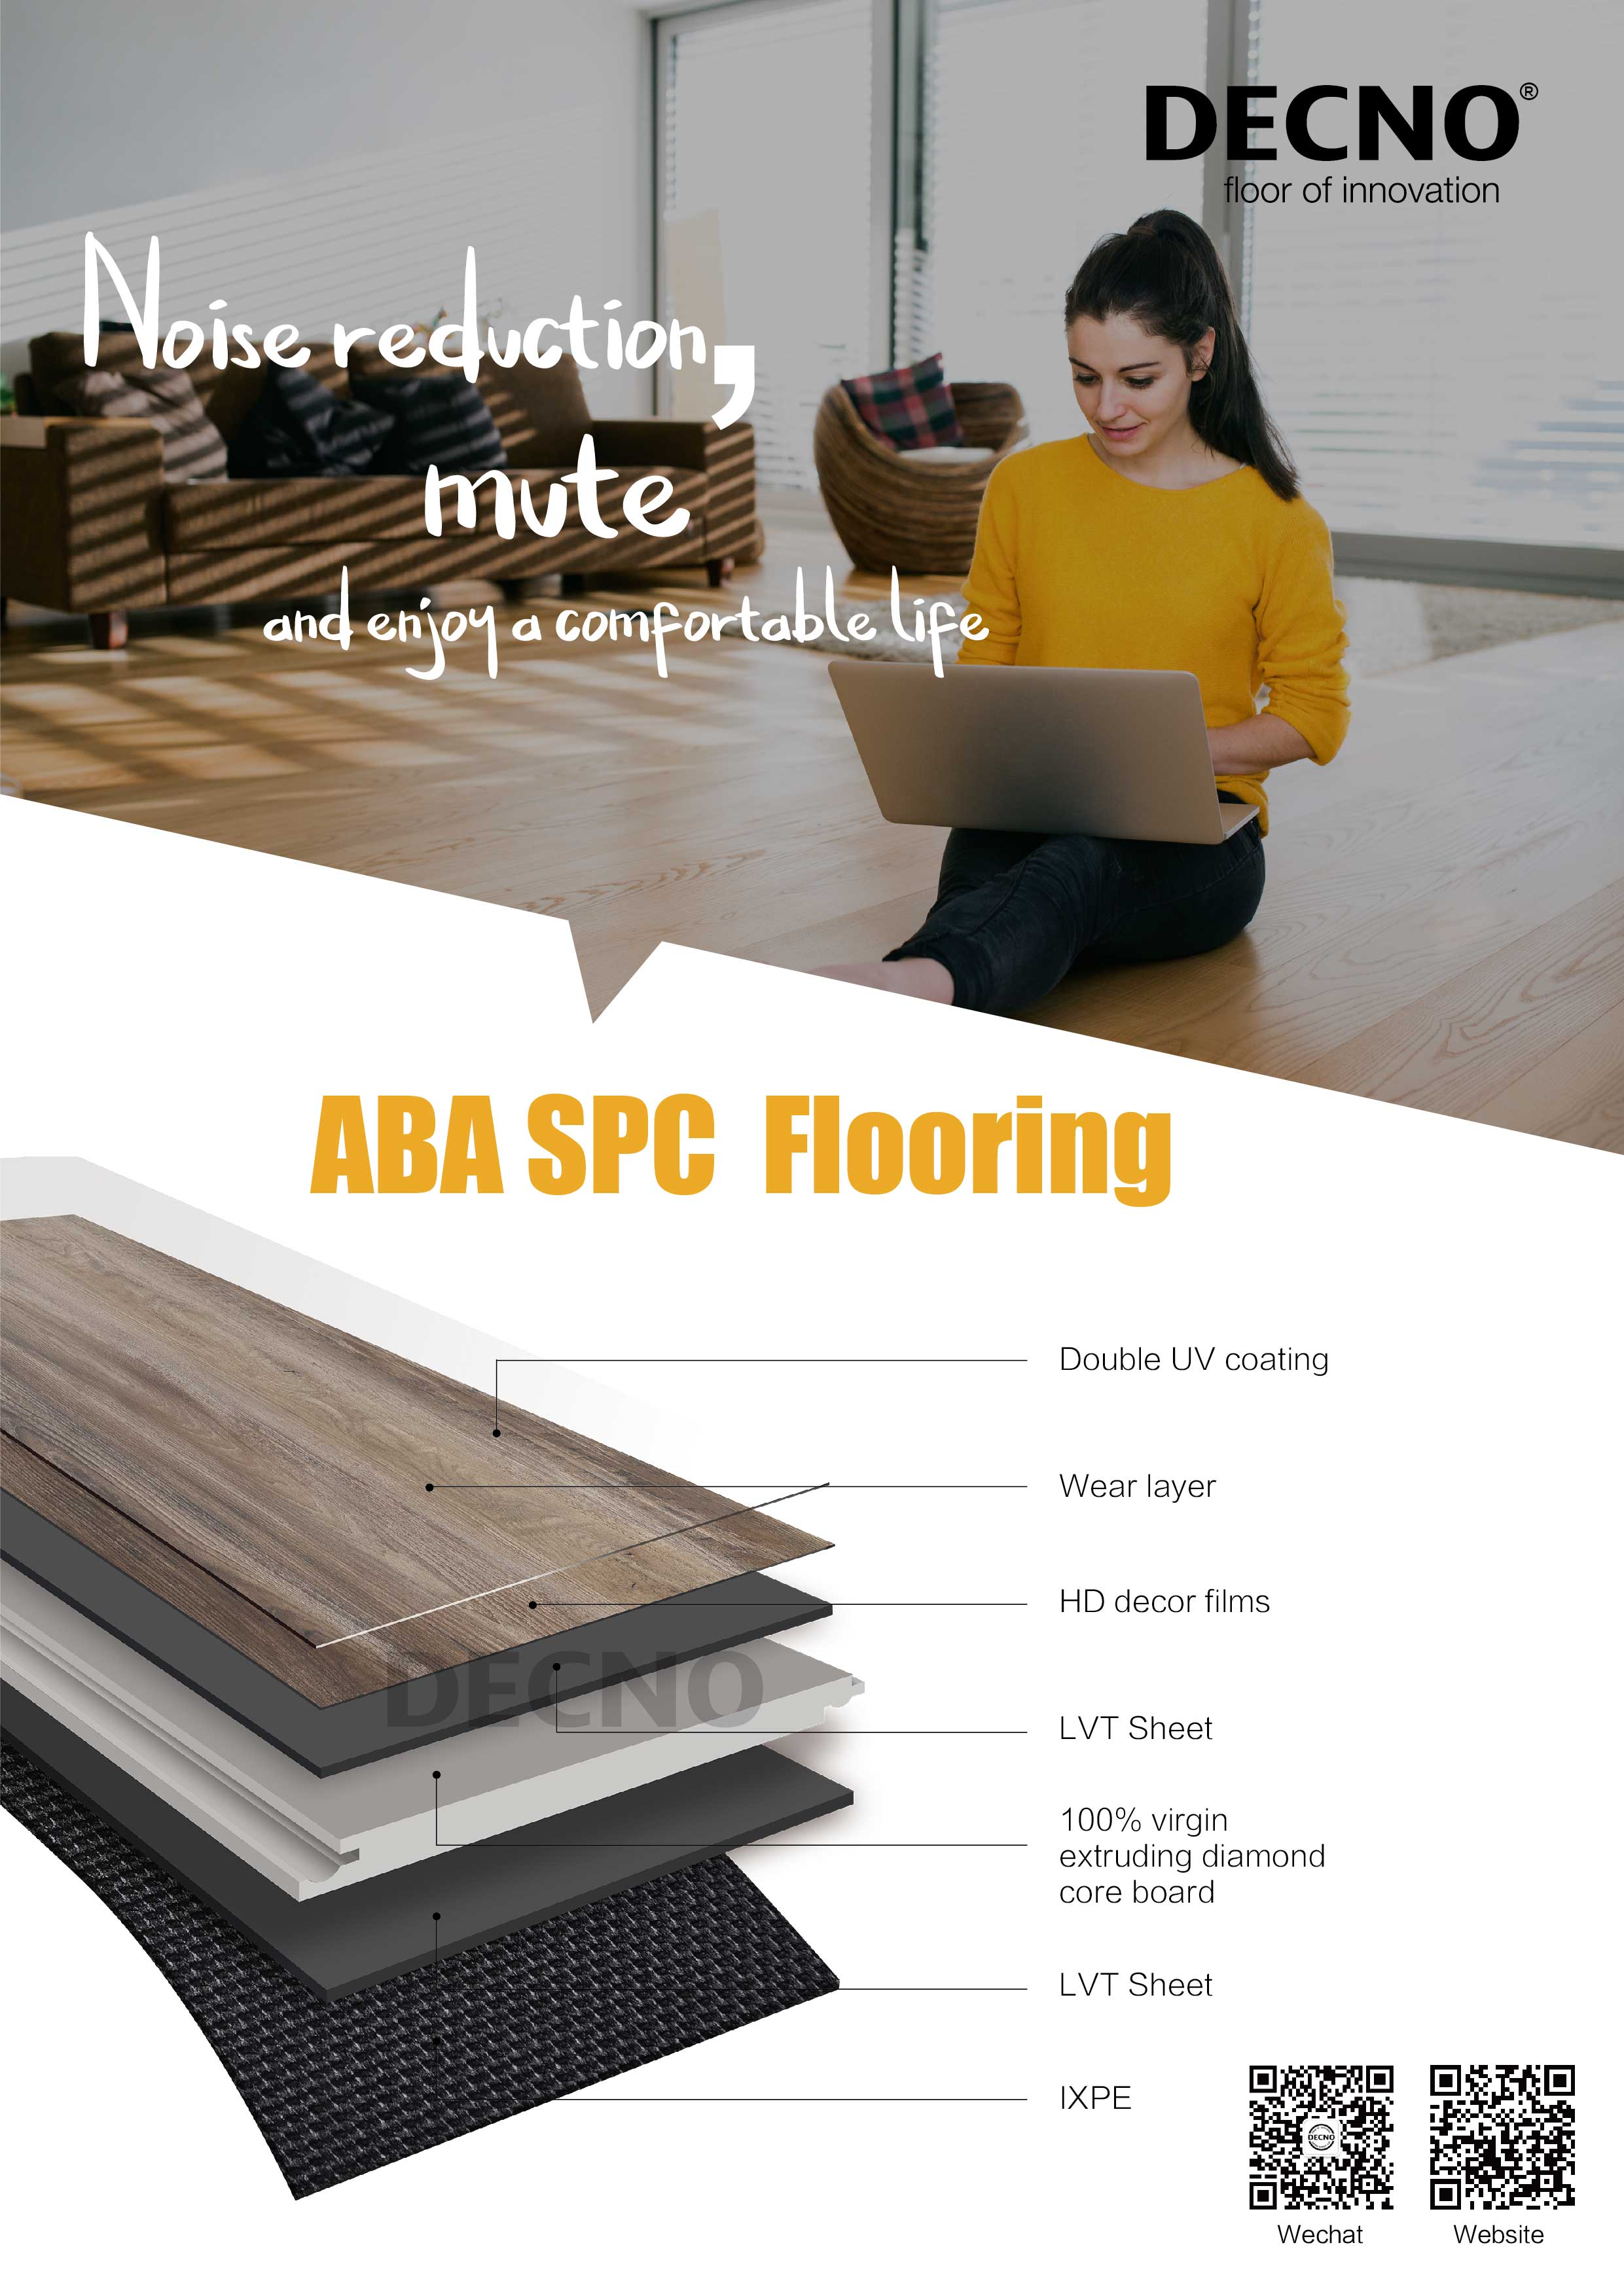 Why Choose ABA SPC Flooring?cid=17